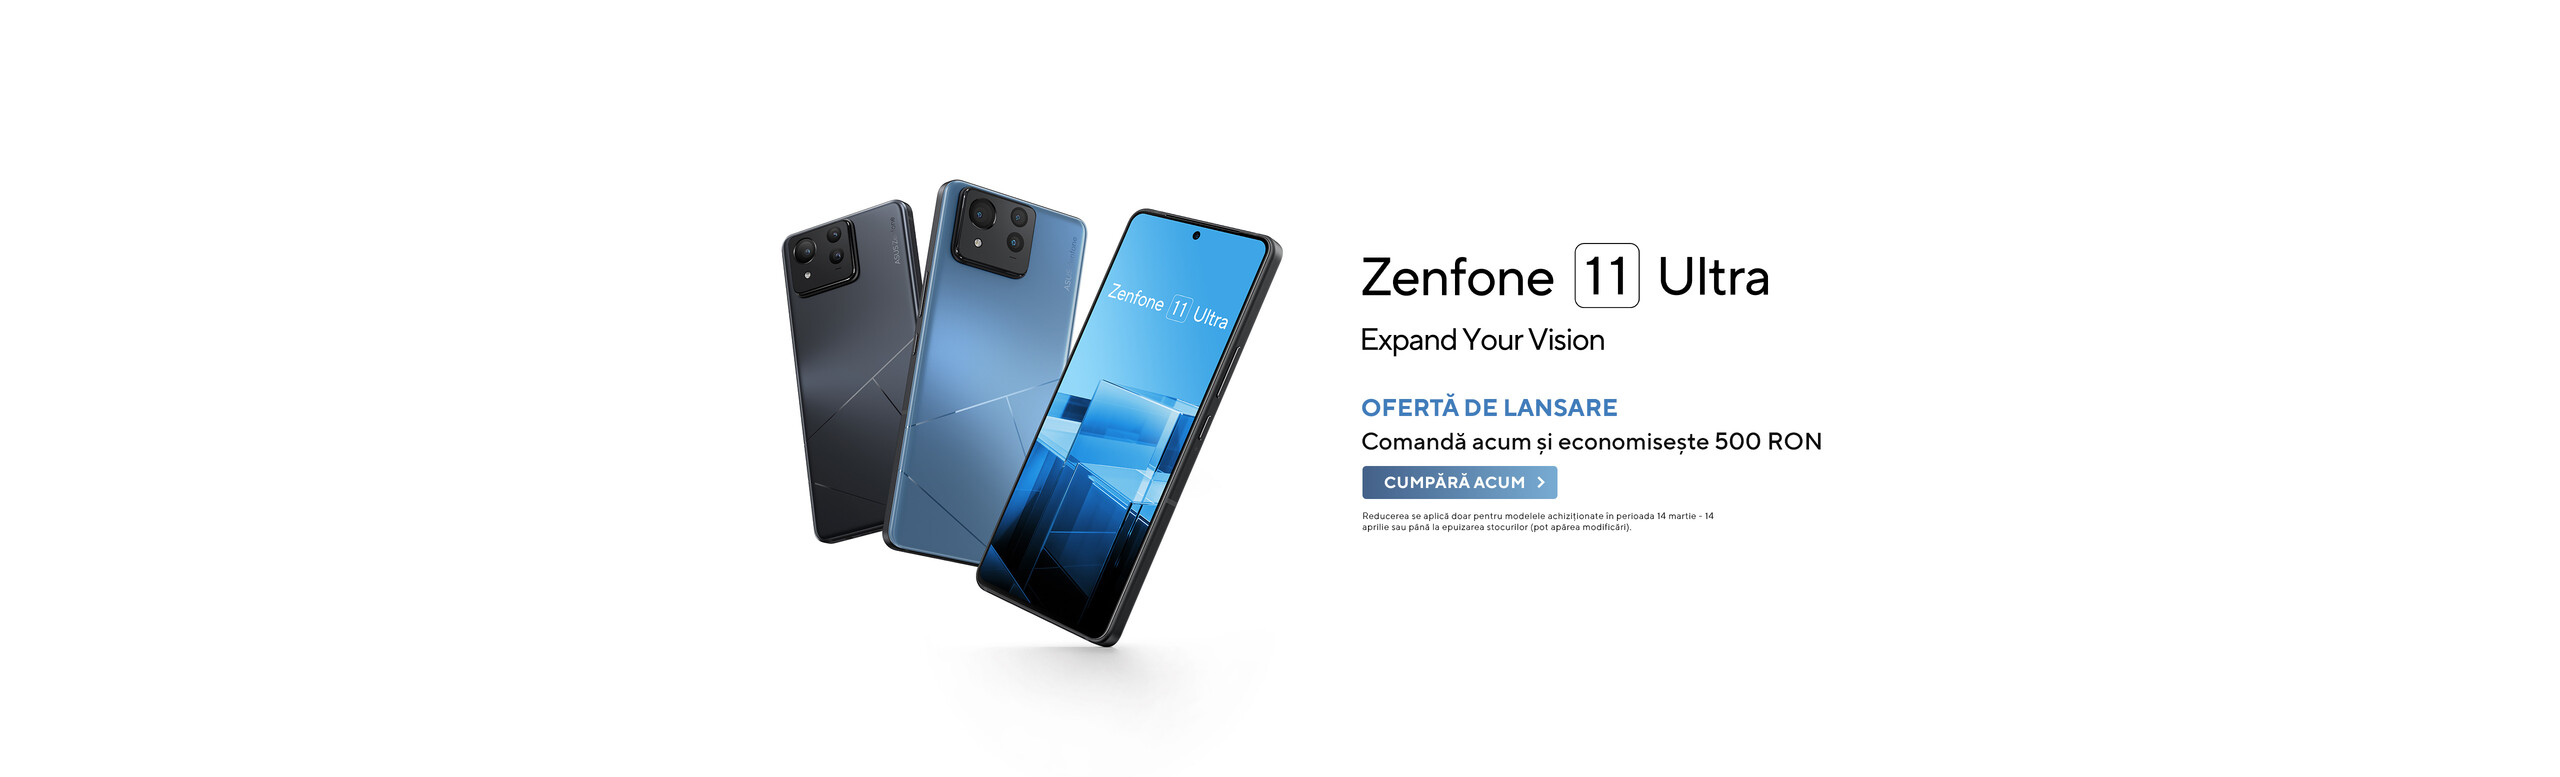 Zenfone 11 Ultra Discount